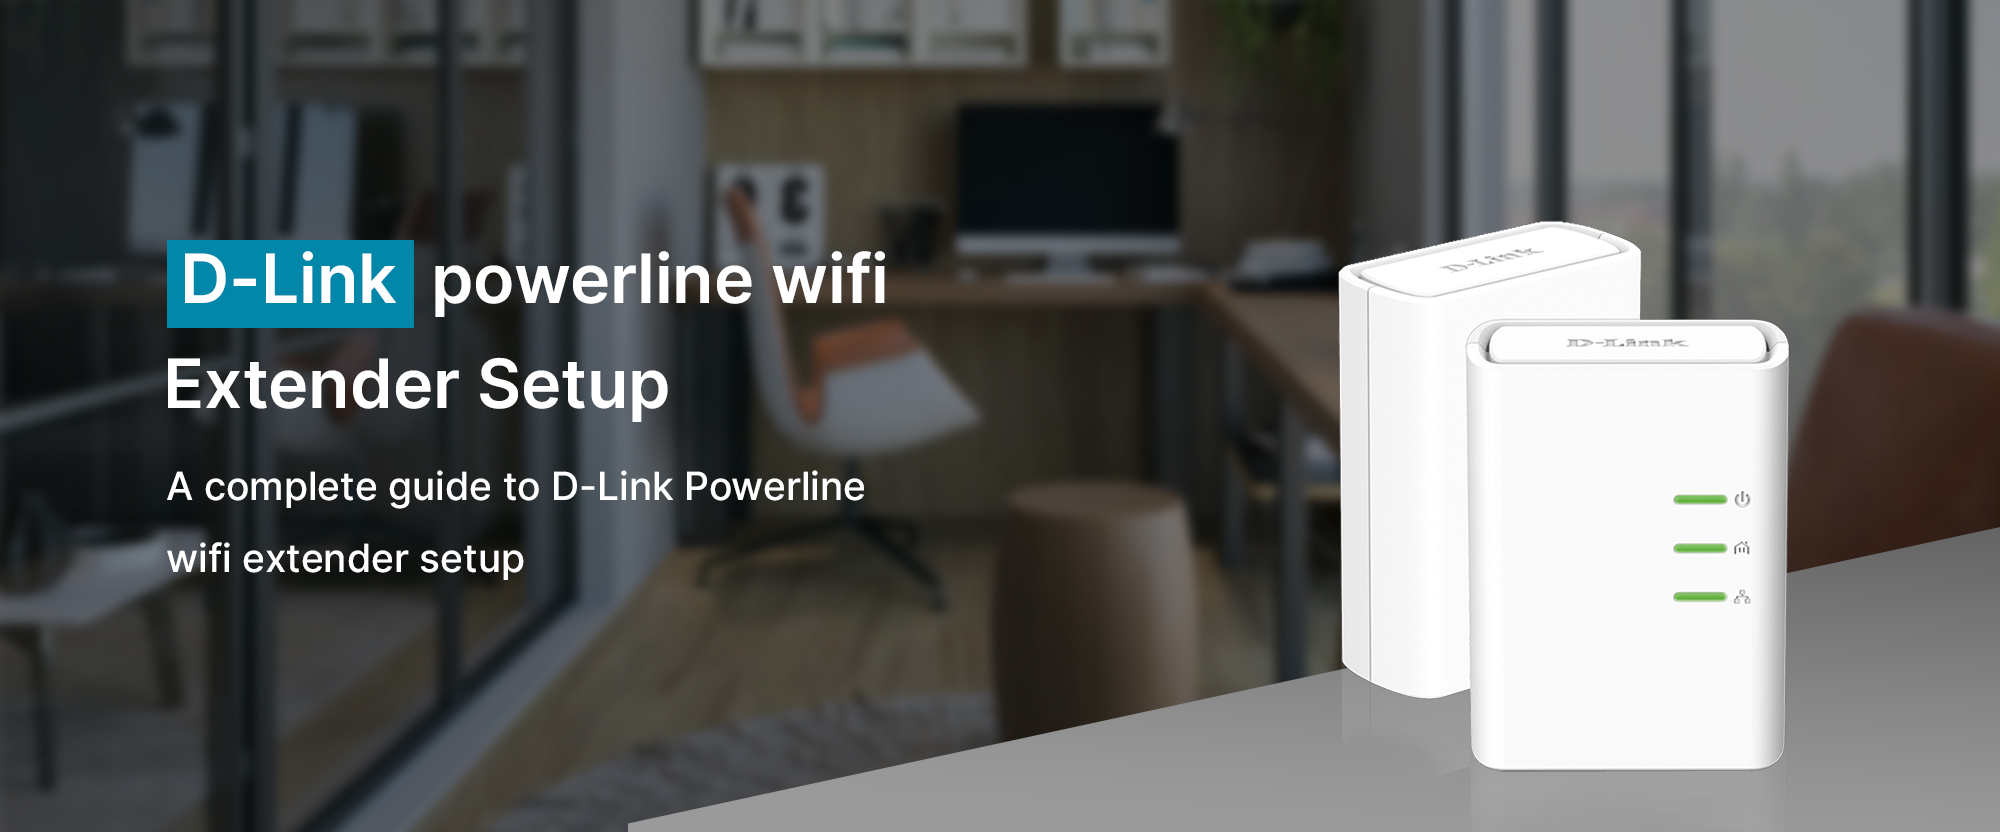 dlinkap.local, D-Link powerline wifi Extender Setup